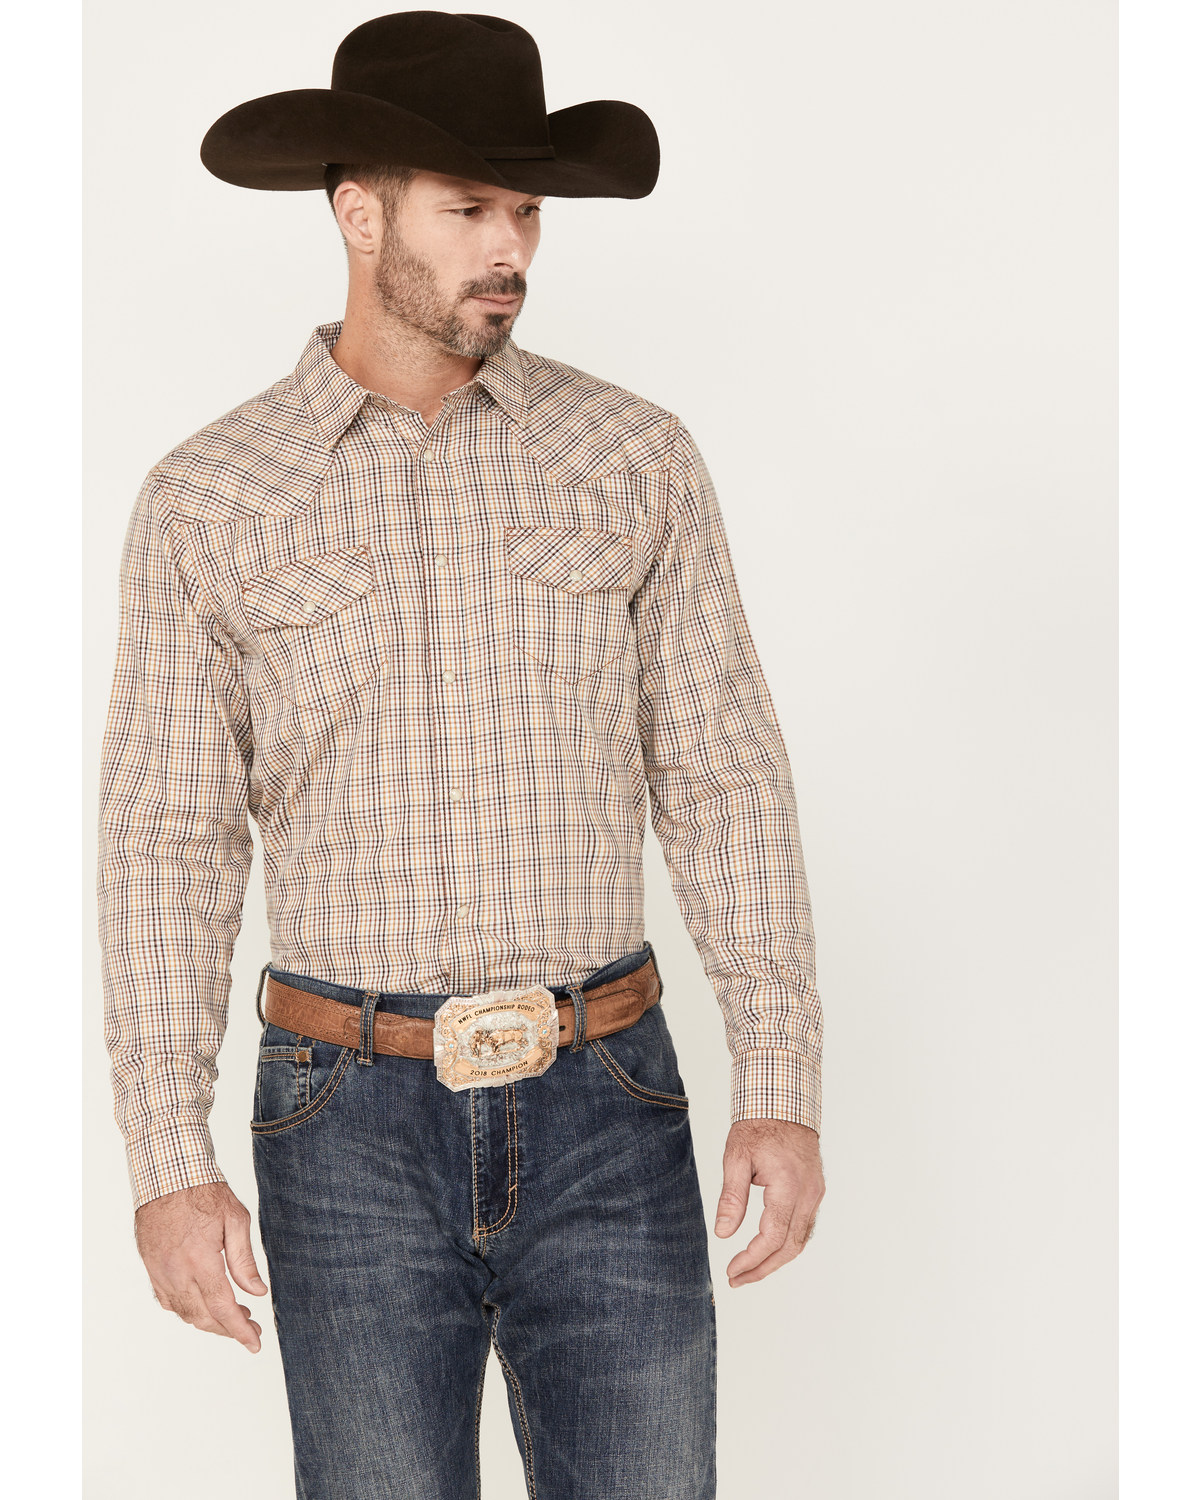 Gibson Men's Saddle Long Sleeve Pearl Snap Western Shirt